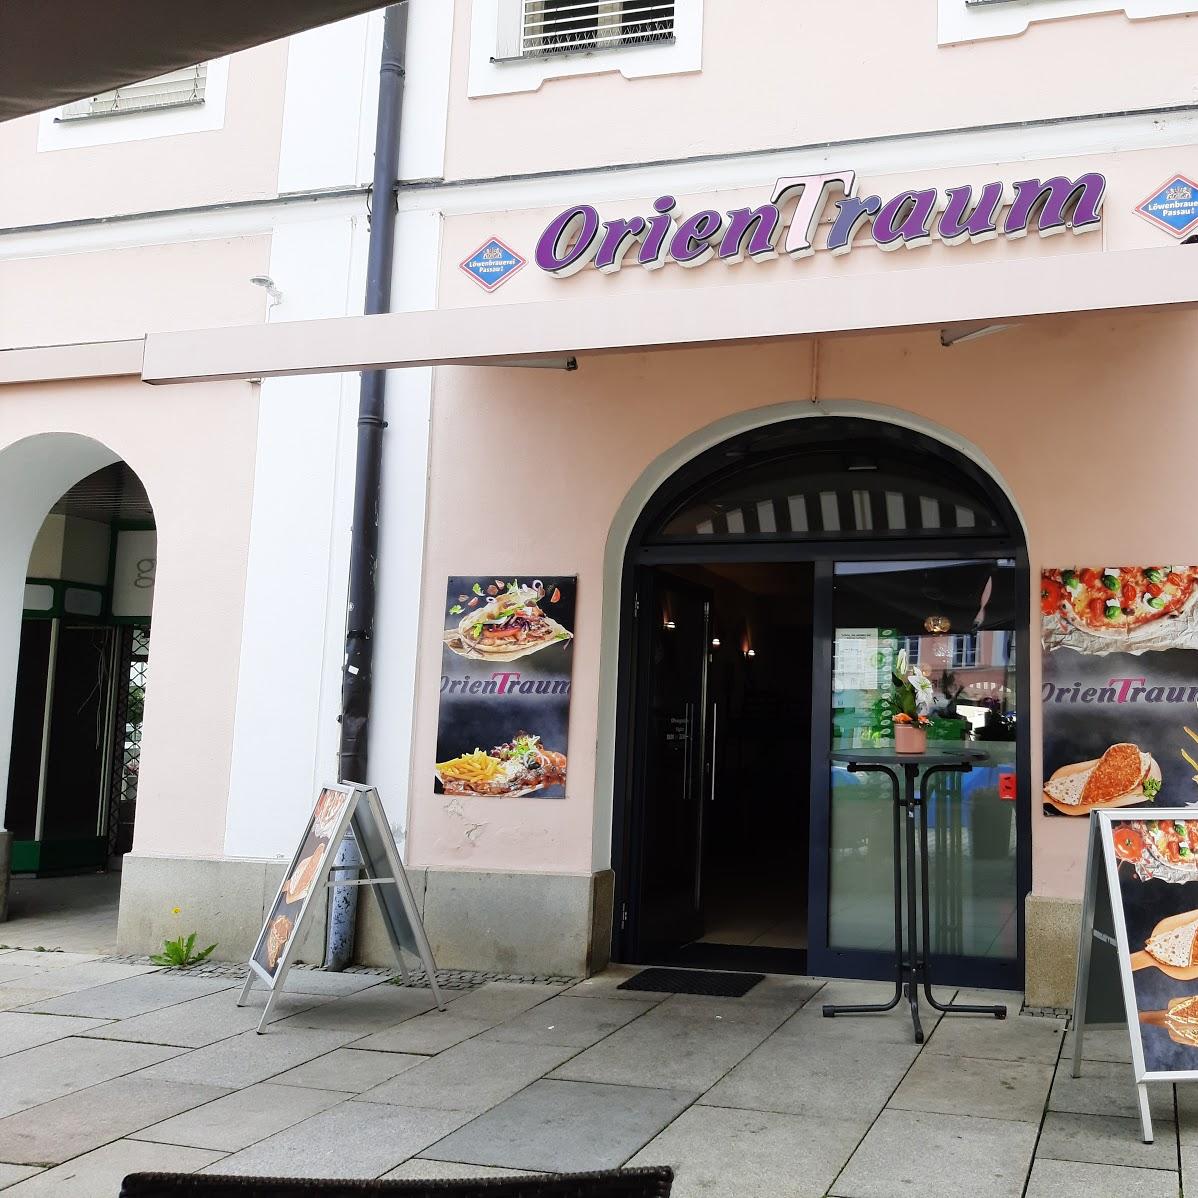 Restaurant "OrienTraum" in  Deggendorf